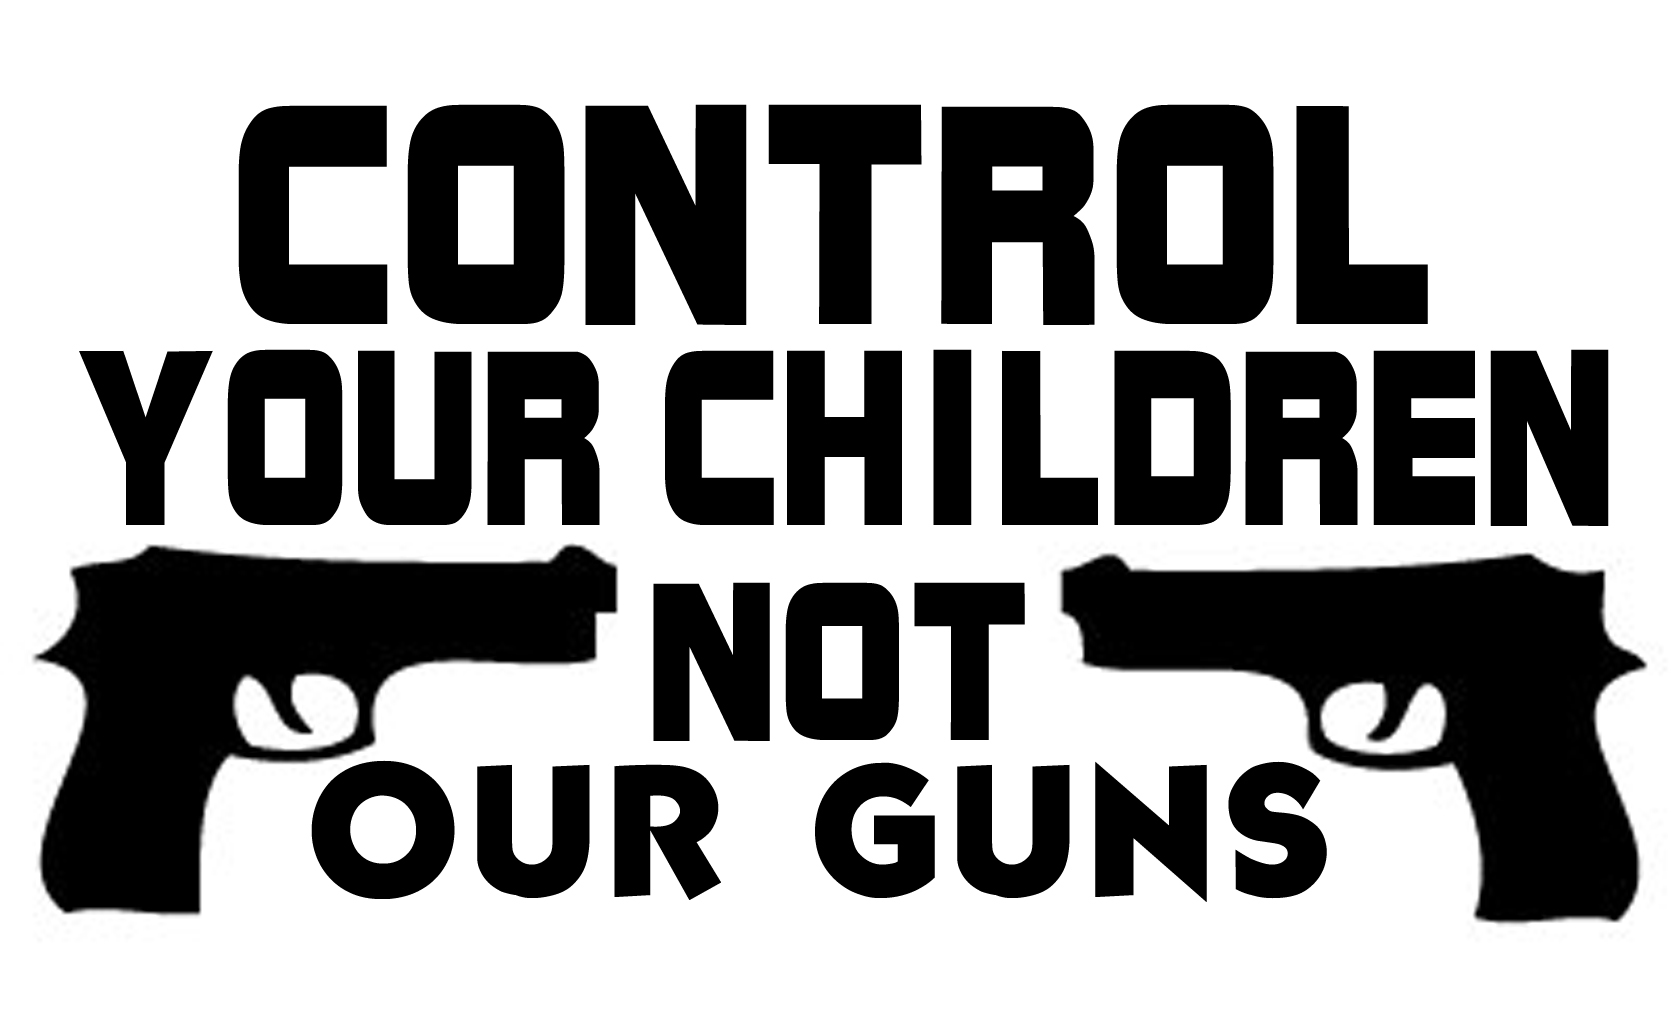 Control your Children Not our Guns Sticker